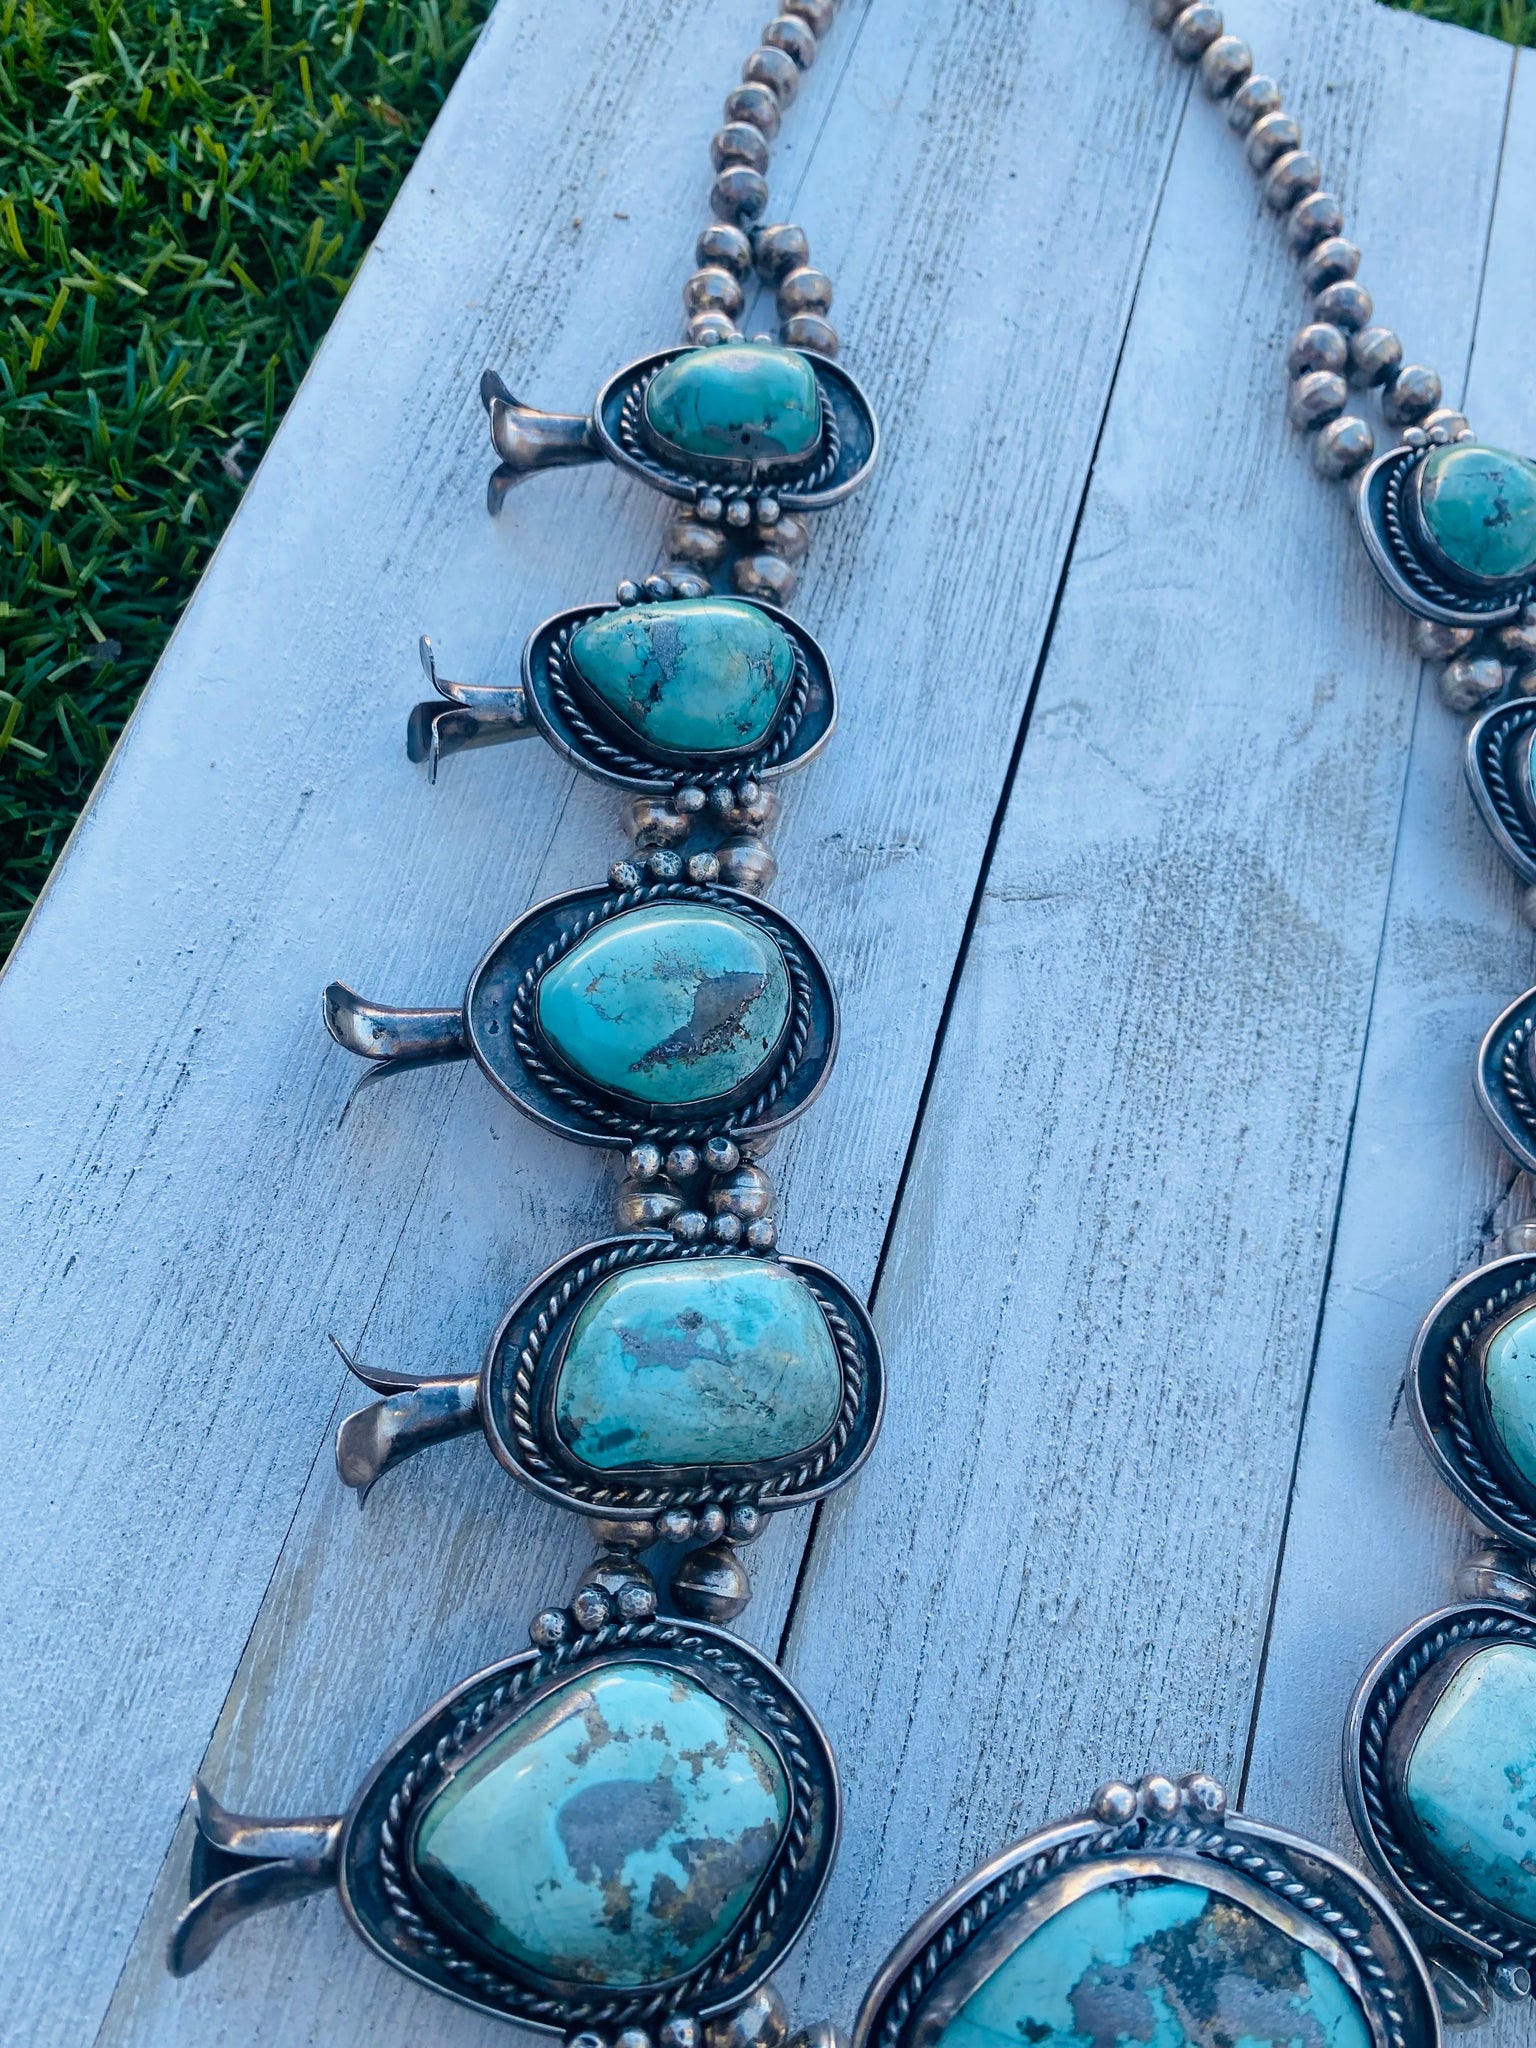 Vintage Turquoise Squash Blossom Necklace - Shaftel Diamonds